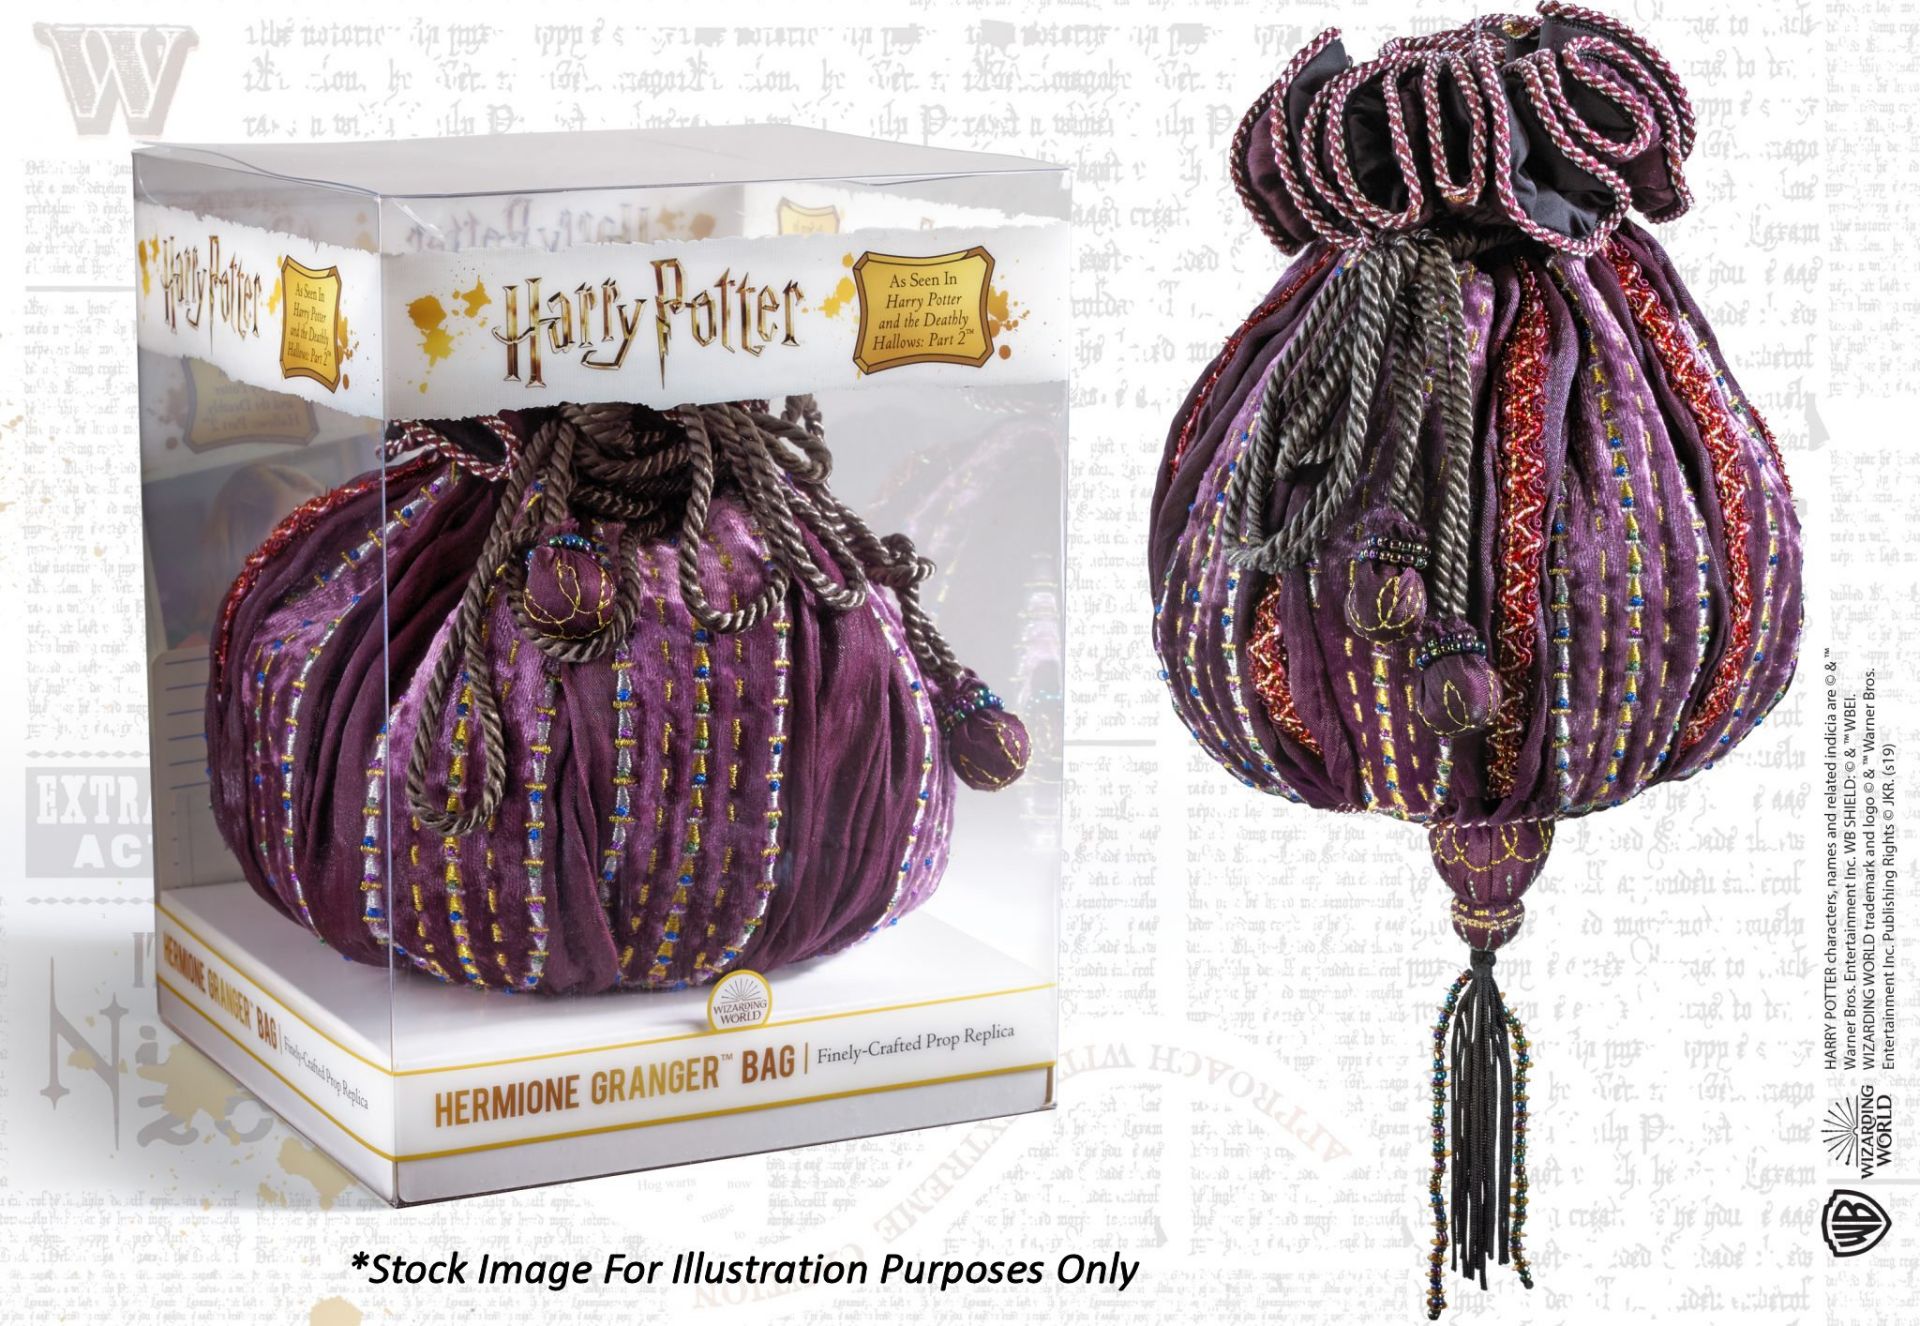 1 x Harry Potter Hermione Granger Bag Prop Replica - New/Boxed